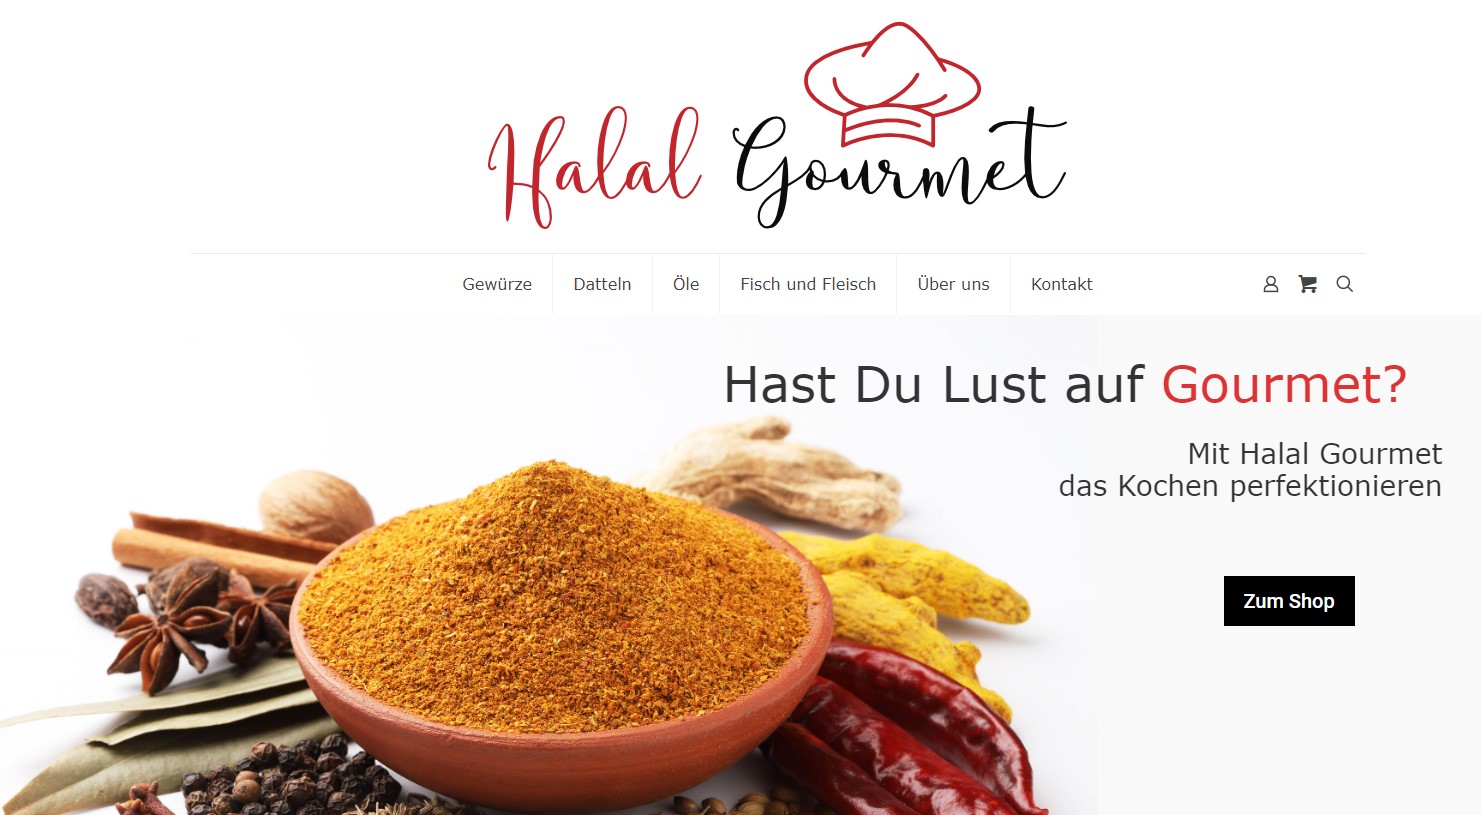 Halal gourmet meat Germany